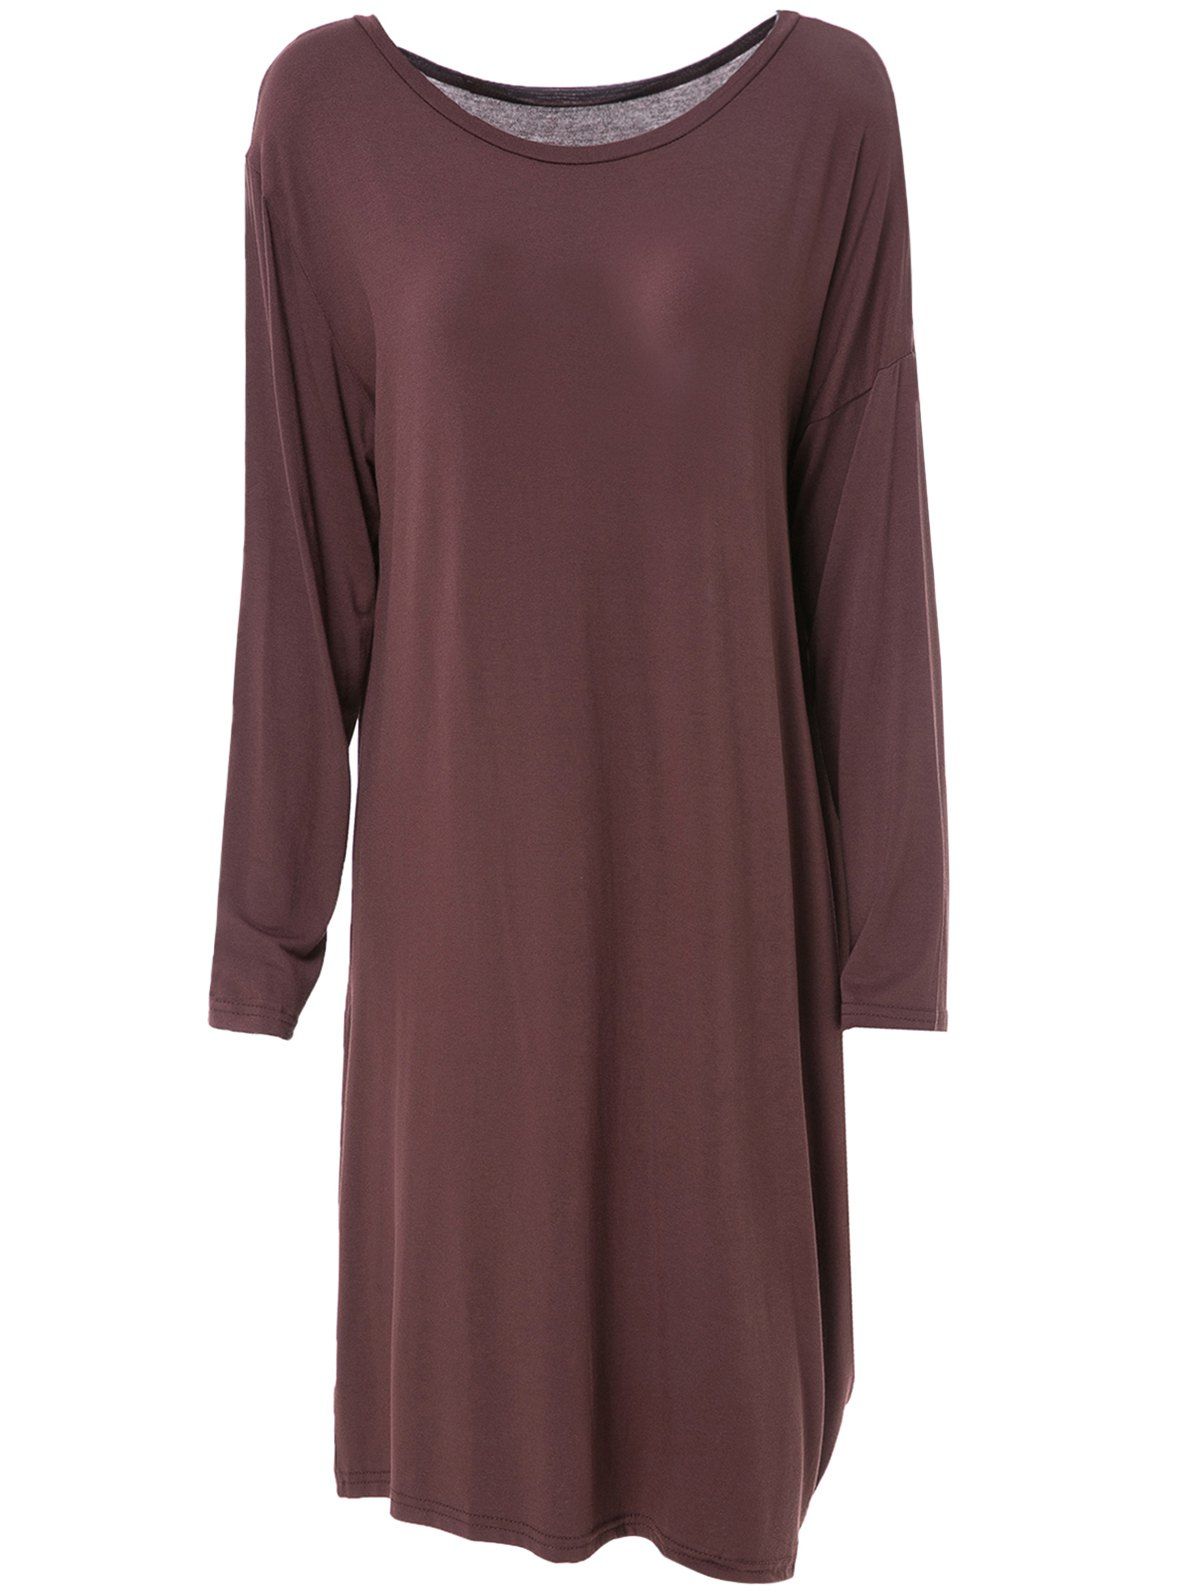 Plain Solid Color Slouchy Drop Shoulder Jersey Shift Tee Dress - DUN M